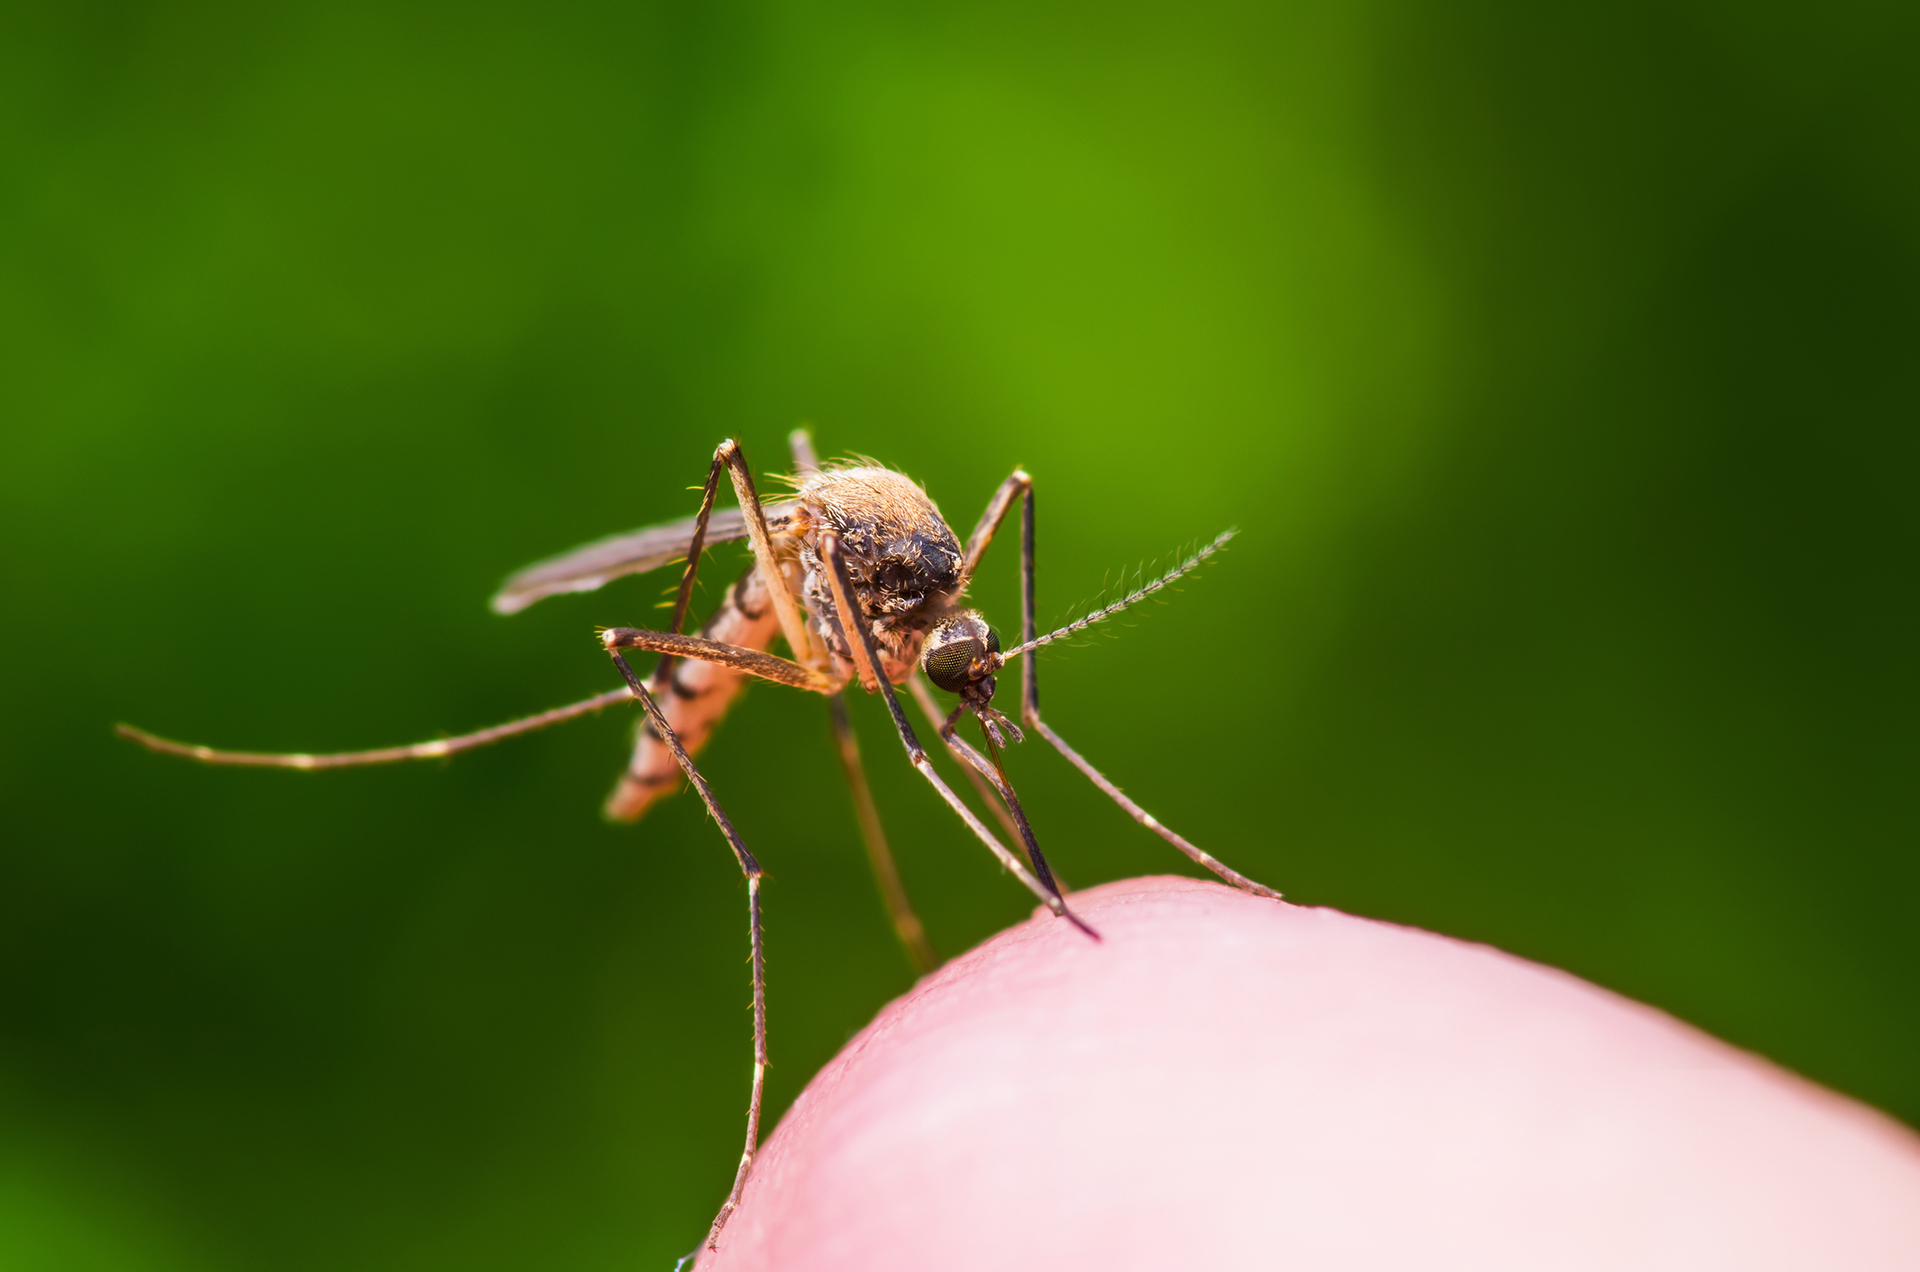 Macro Photo of Yellow Fever, Malaria or Zika Virus Infected Mosquito Insect Bite